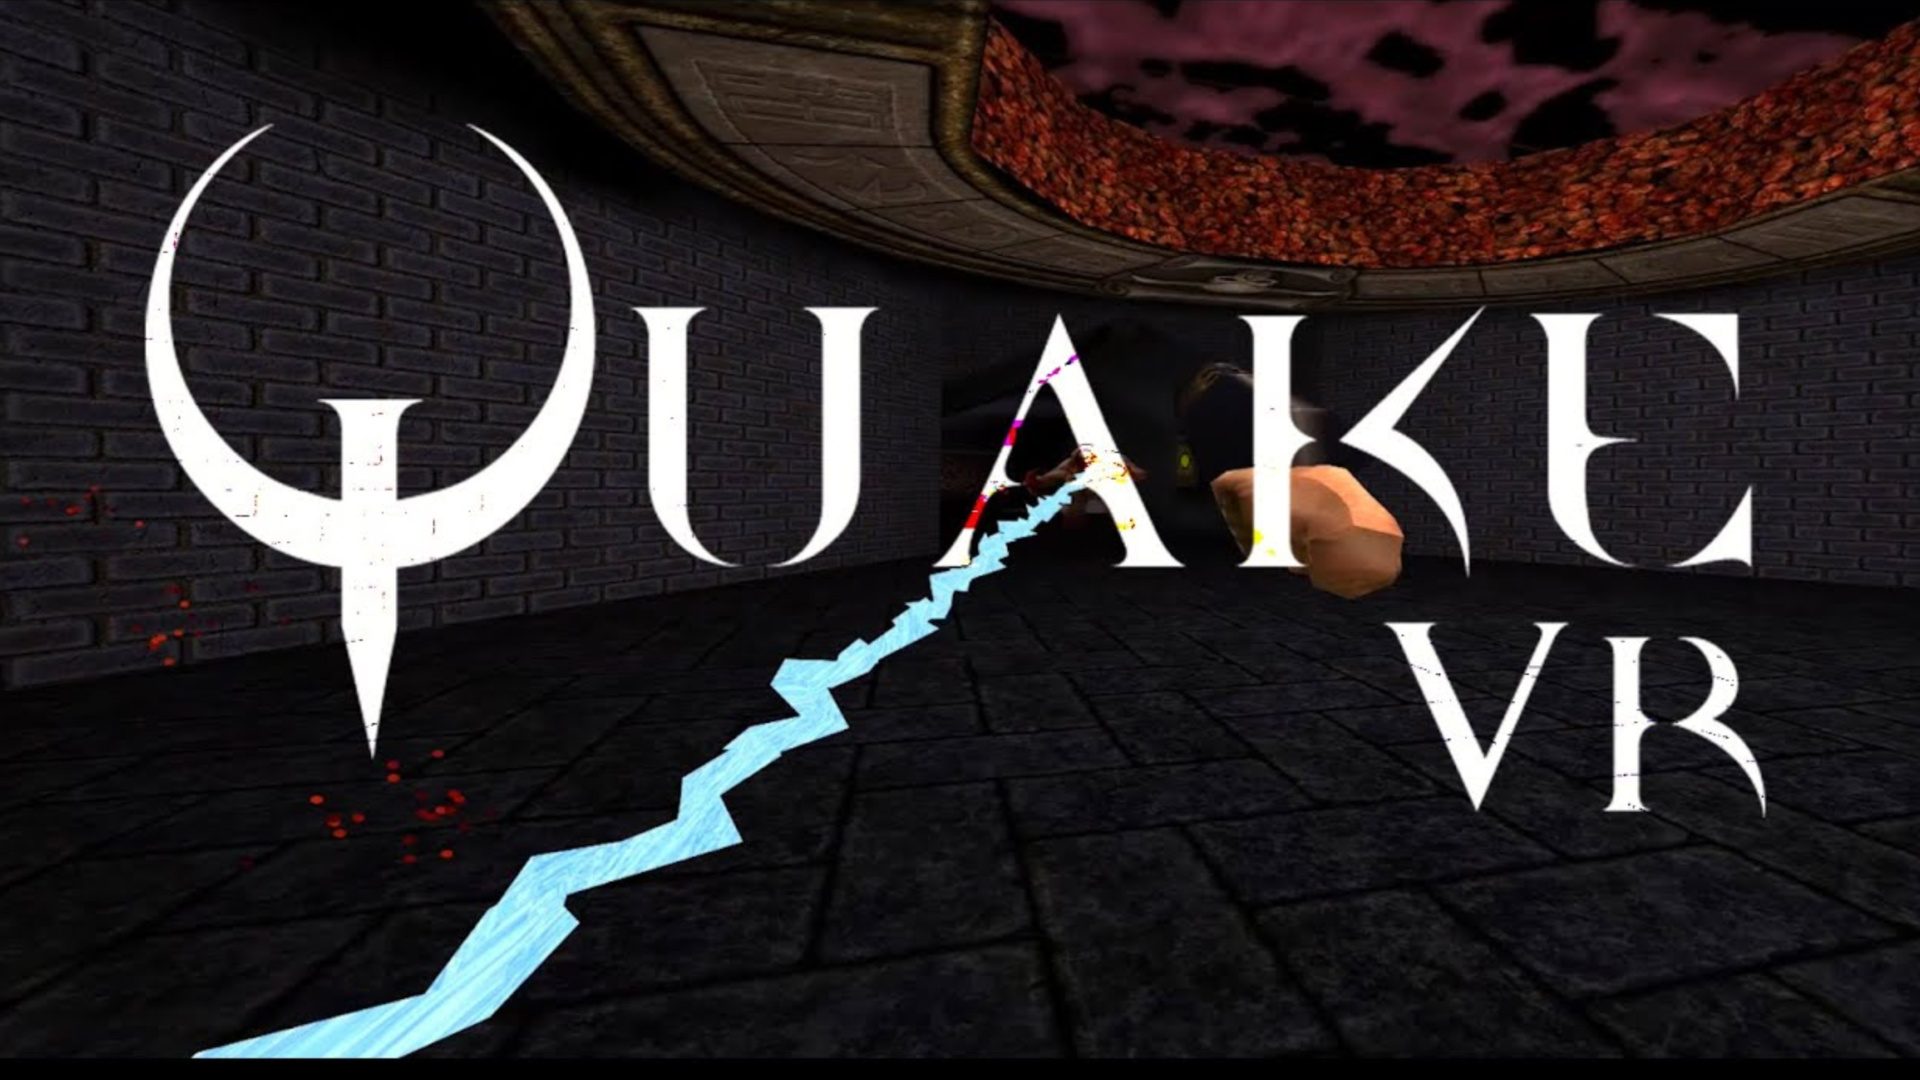 Quake 1996. Quest 1 VR. Quake vr